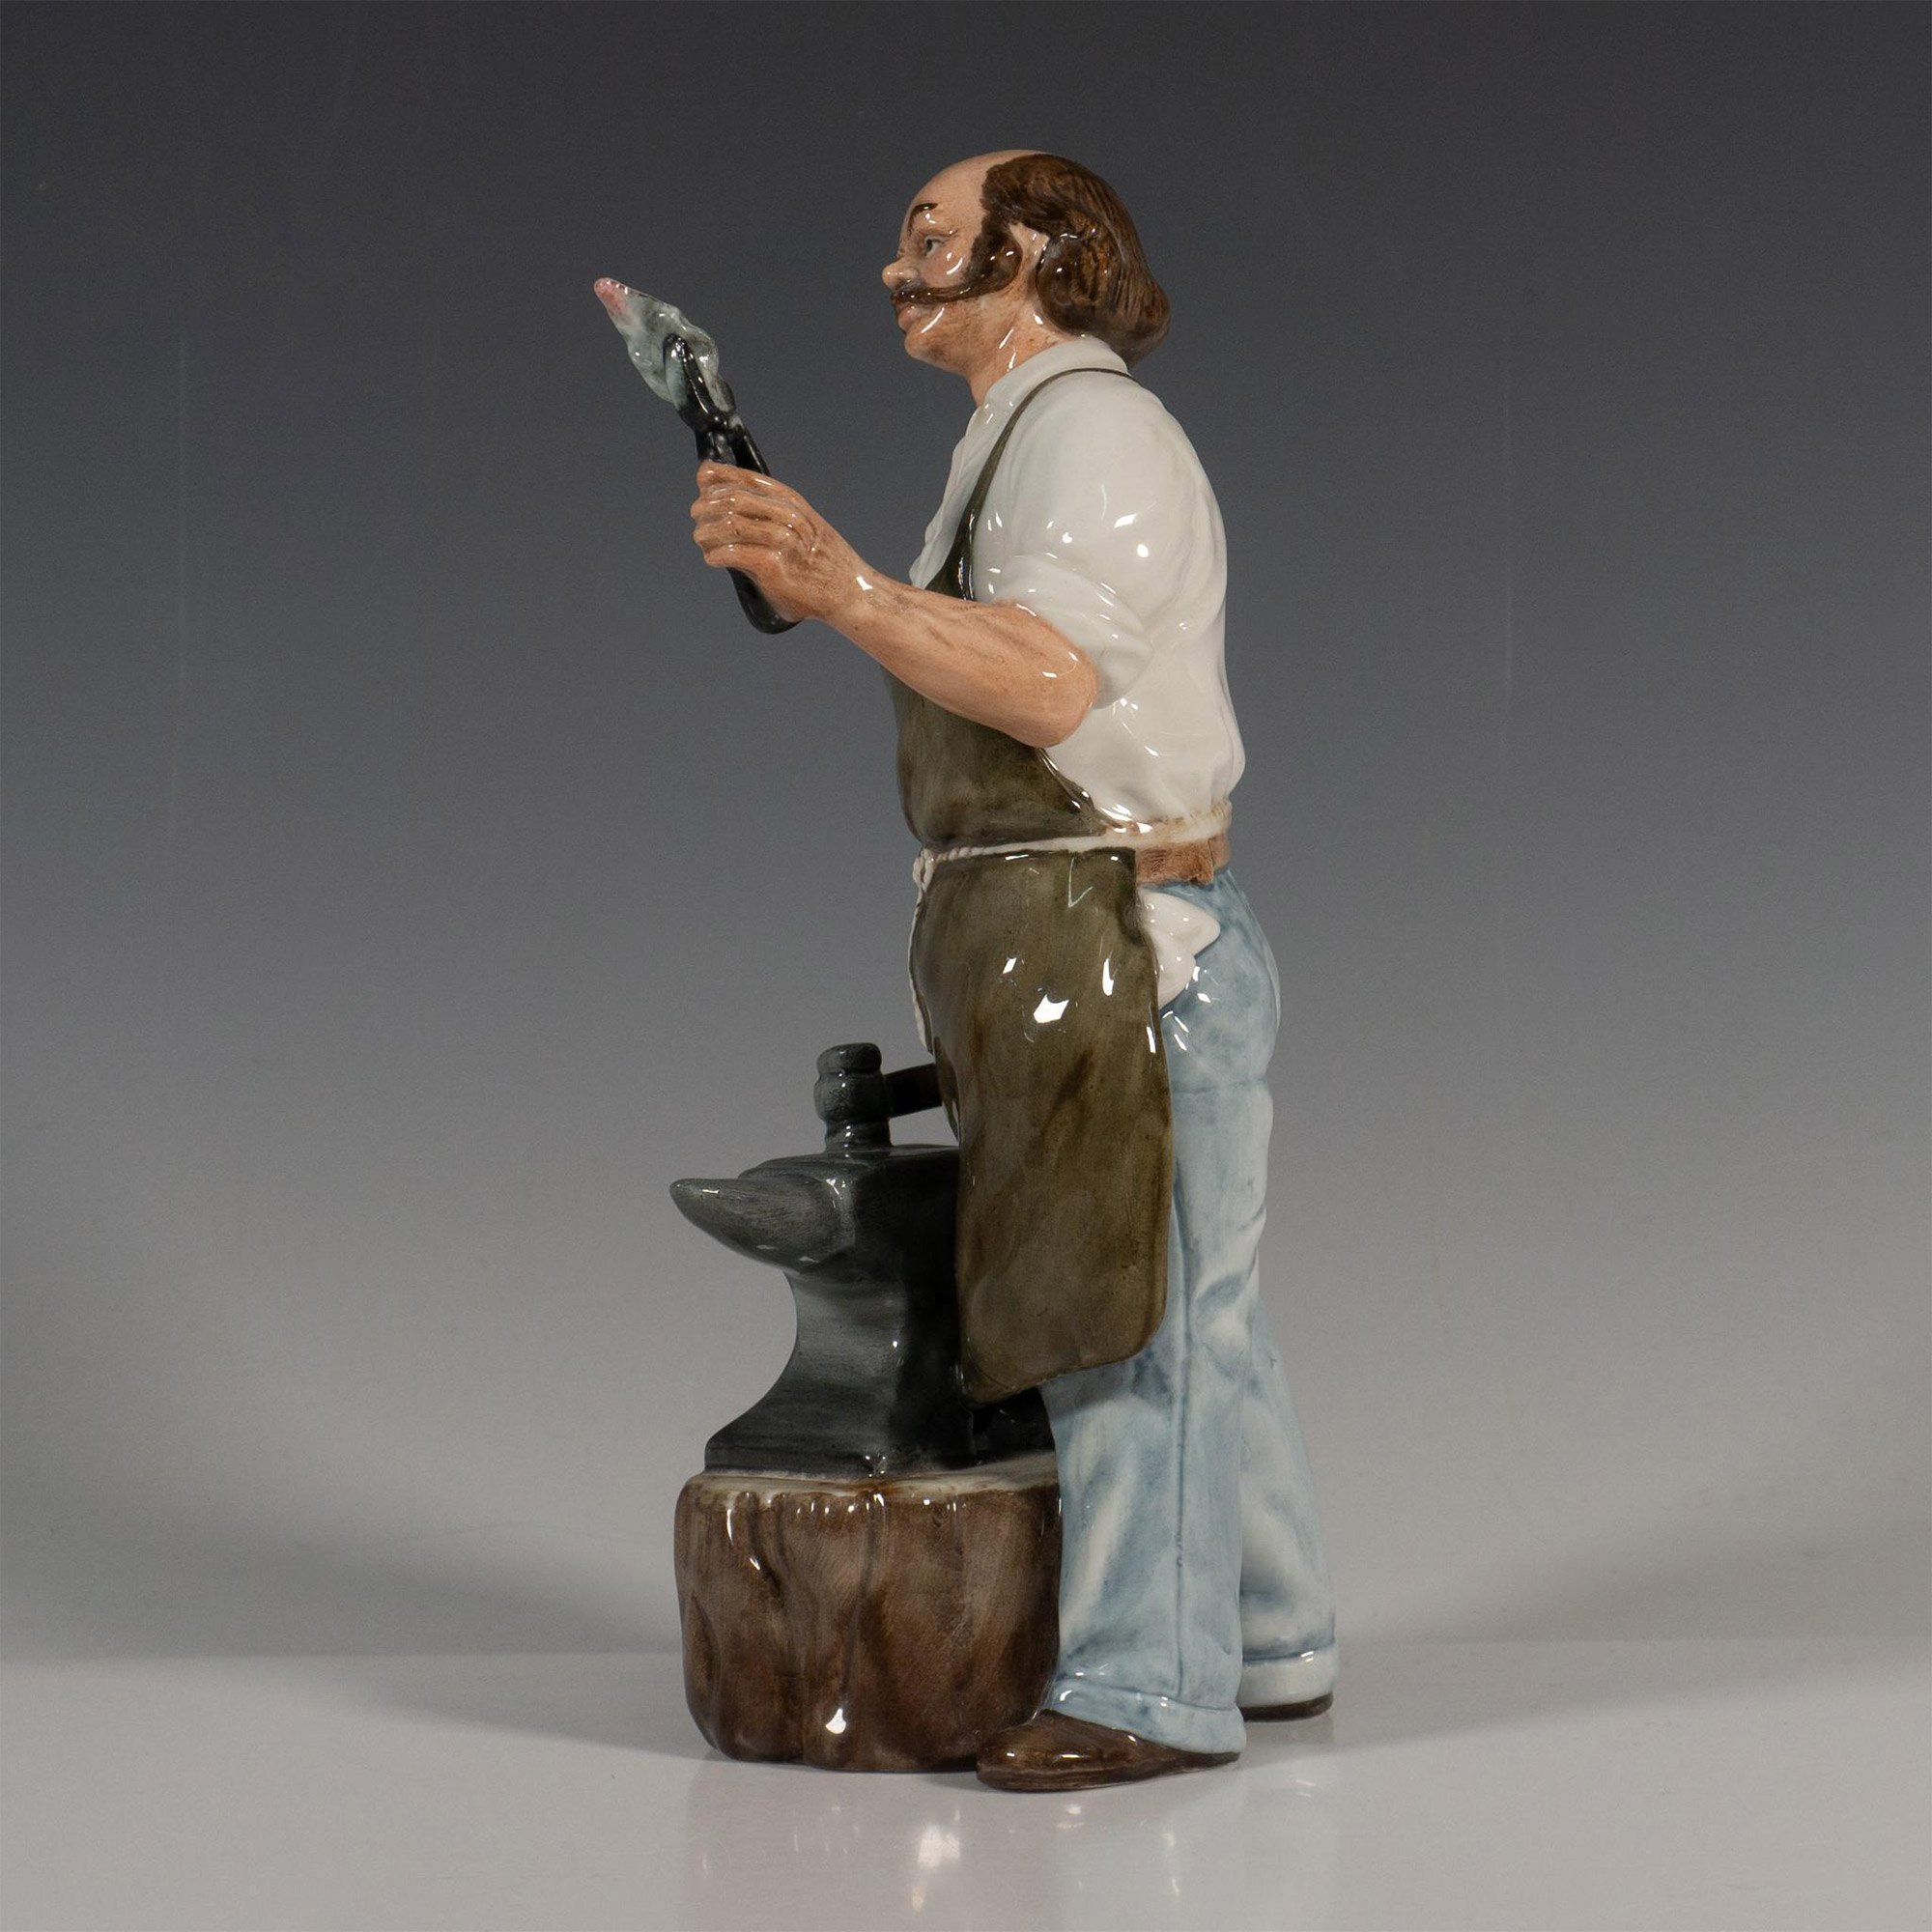 Blacksmith HN2782 - Royal Doulton Figurine - Image 2 of 4